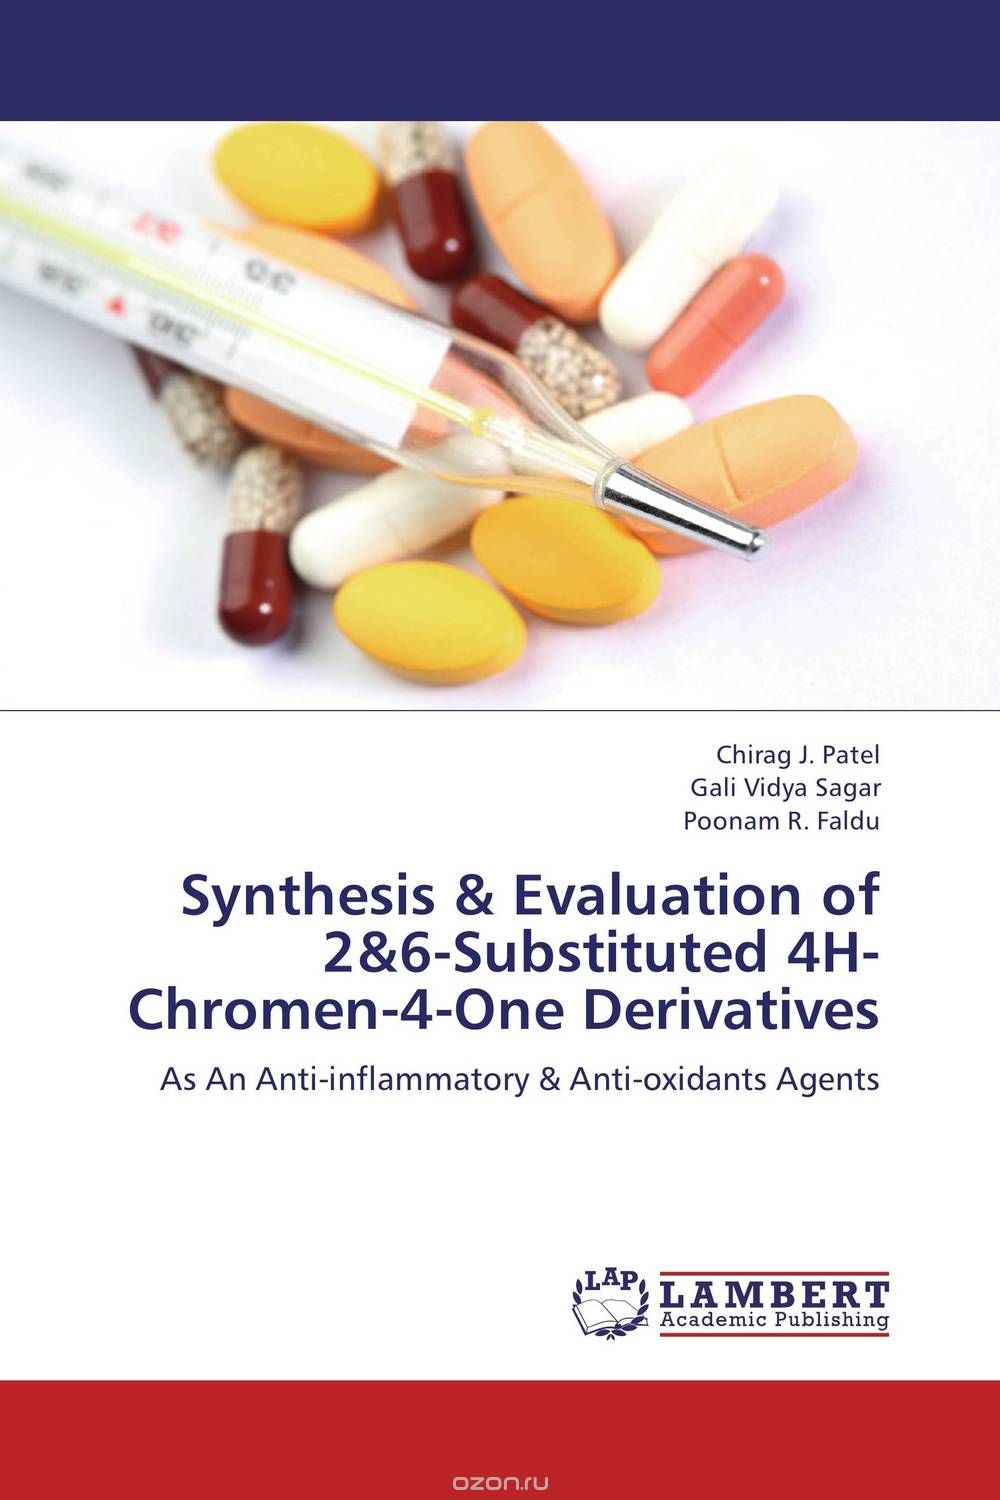 Скачать книгу "Synthesis & Evaluation of 2&6-Substituted 4H-Chromen-4-One Derivatives"